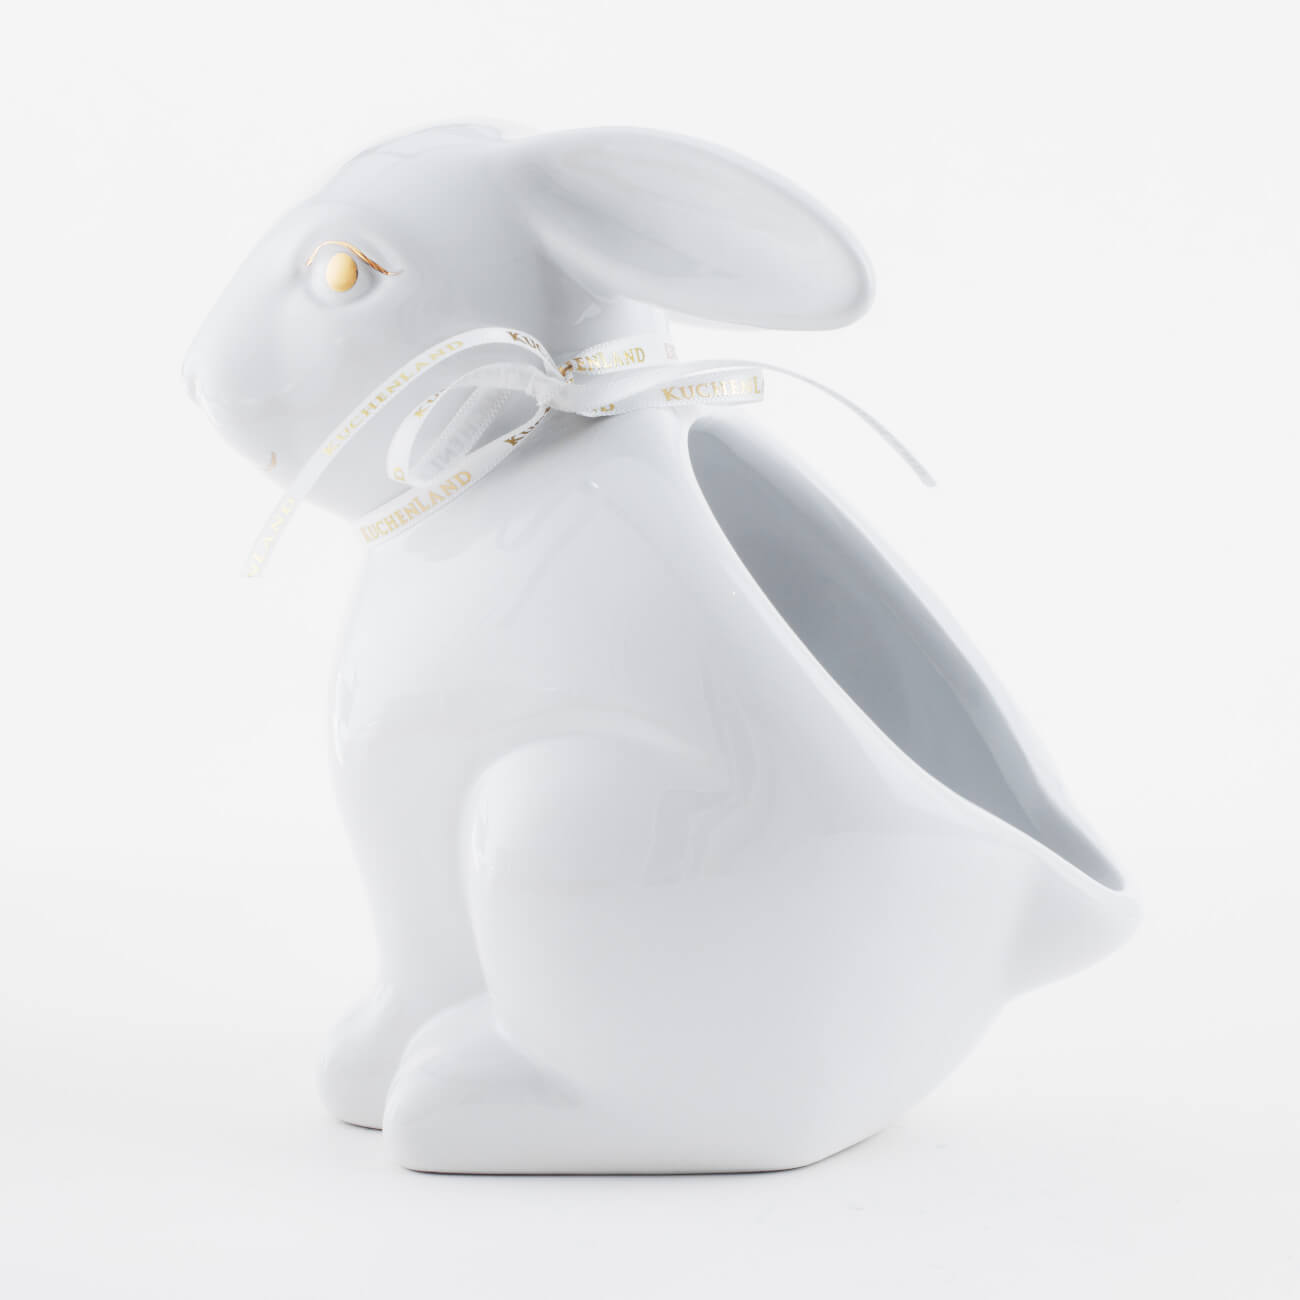 Конфетница, 17х17 см, керамика, белая, Кролик, Easter gold кружка 450 мл керамика белая кролик на ручке easter gold